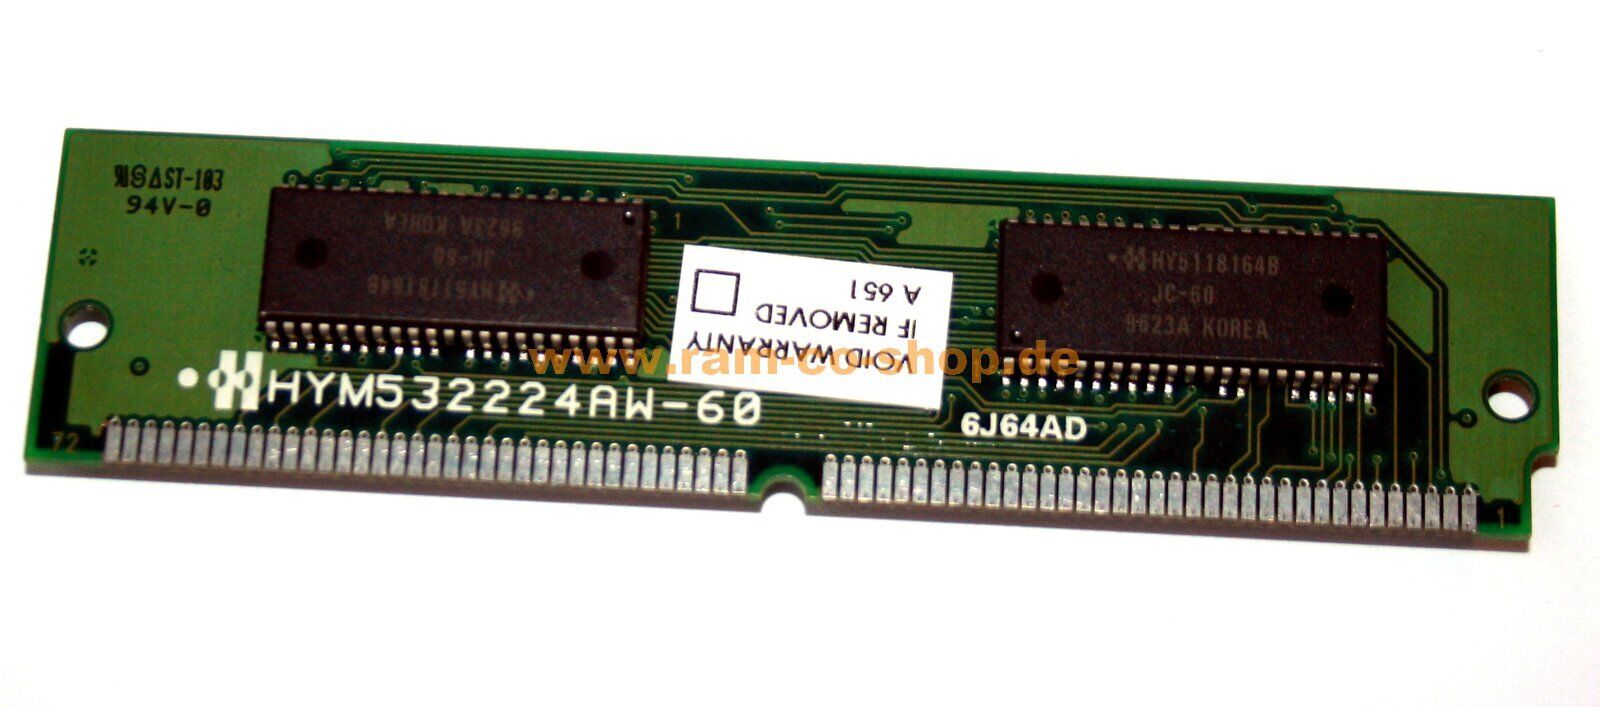 8MB EDO-RAM 60ns 72-pin Non-Parity PS/2 Memory 'Hyundai HYM532224AW-60'